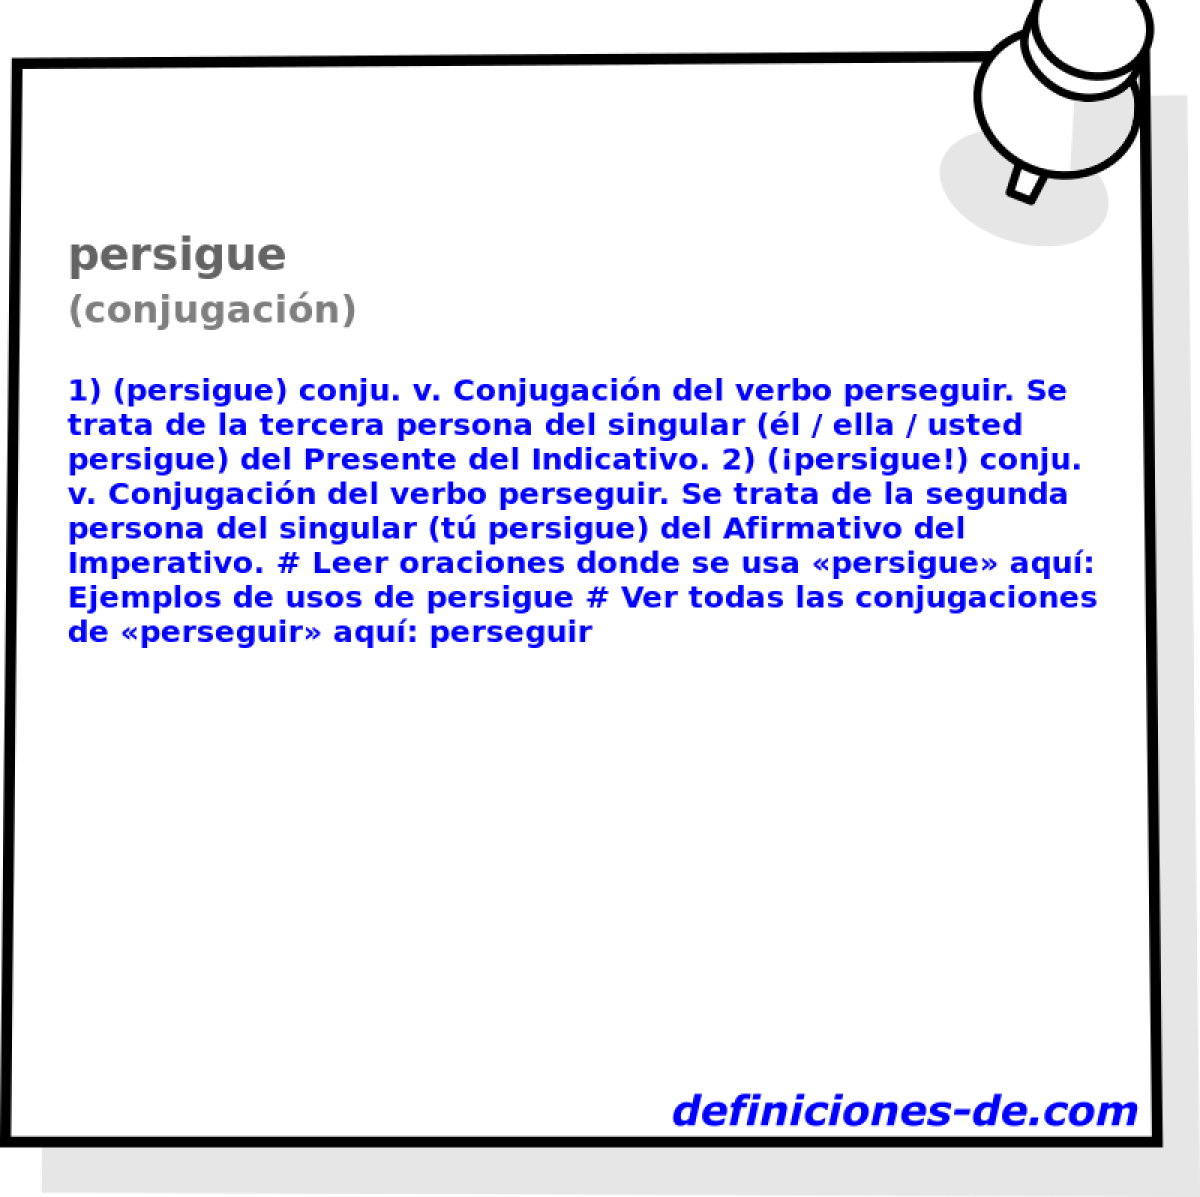 persigue (conjugacin)